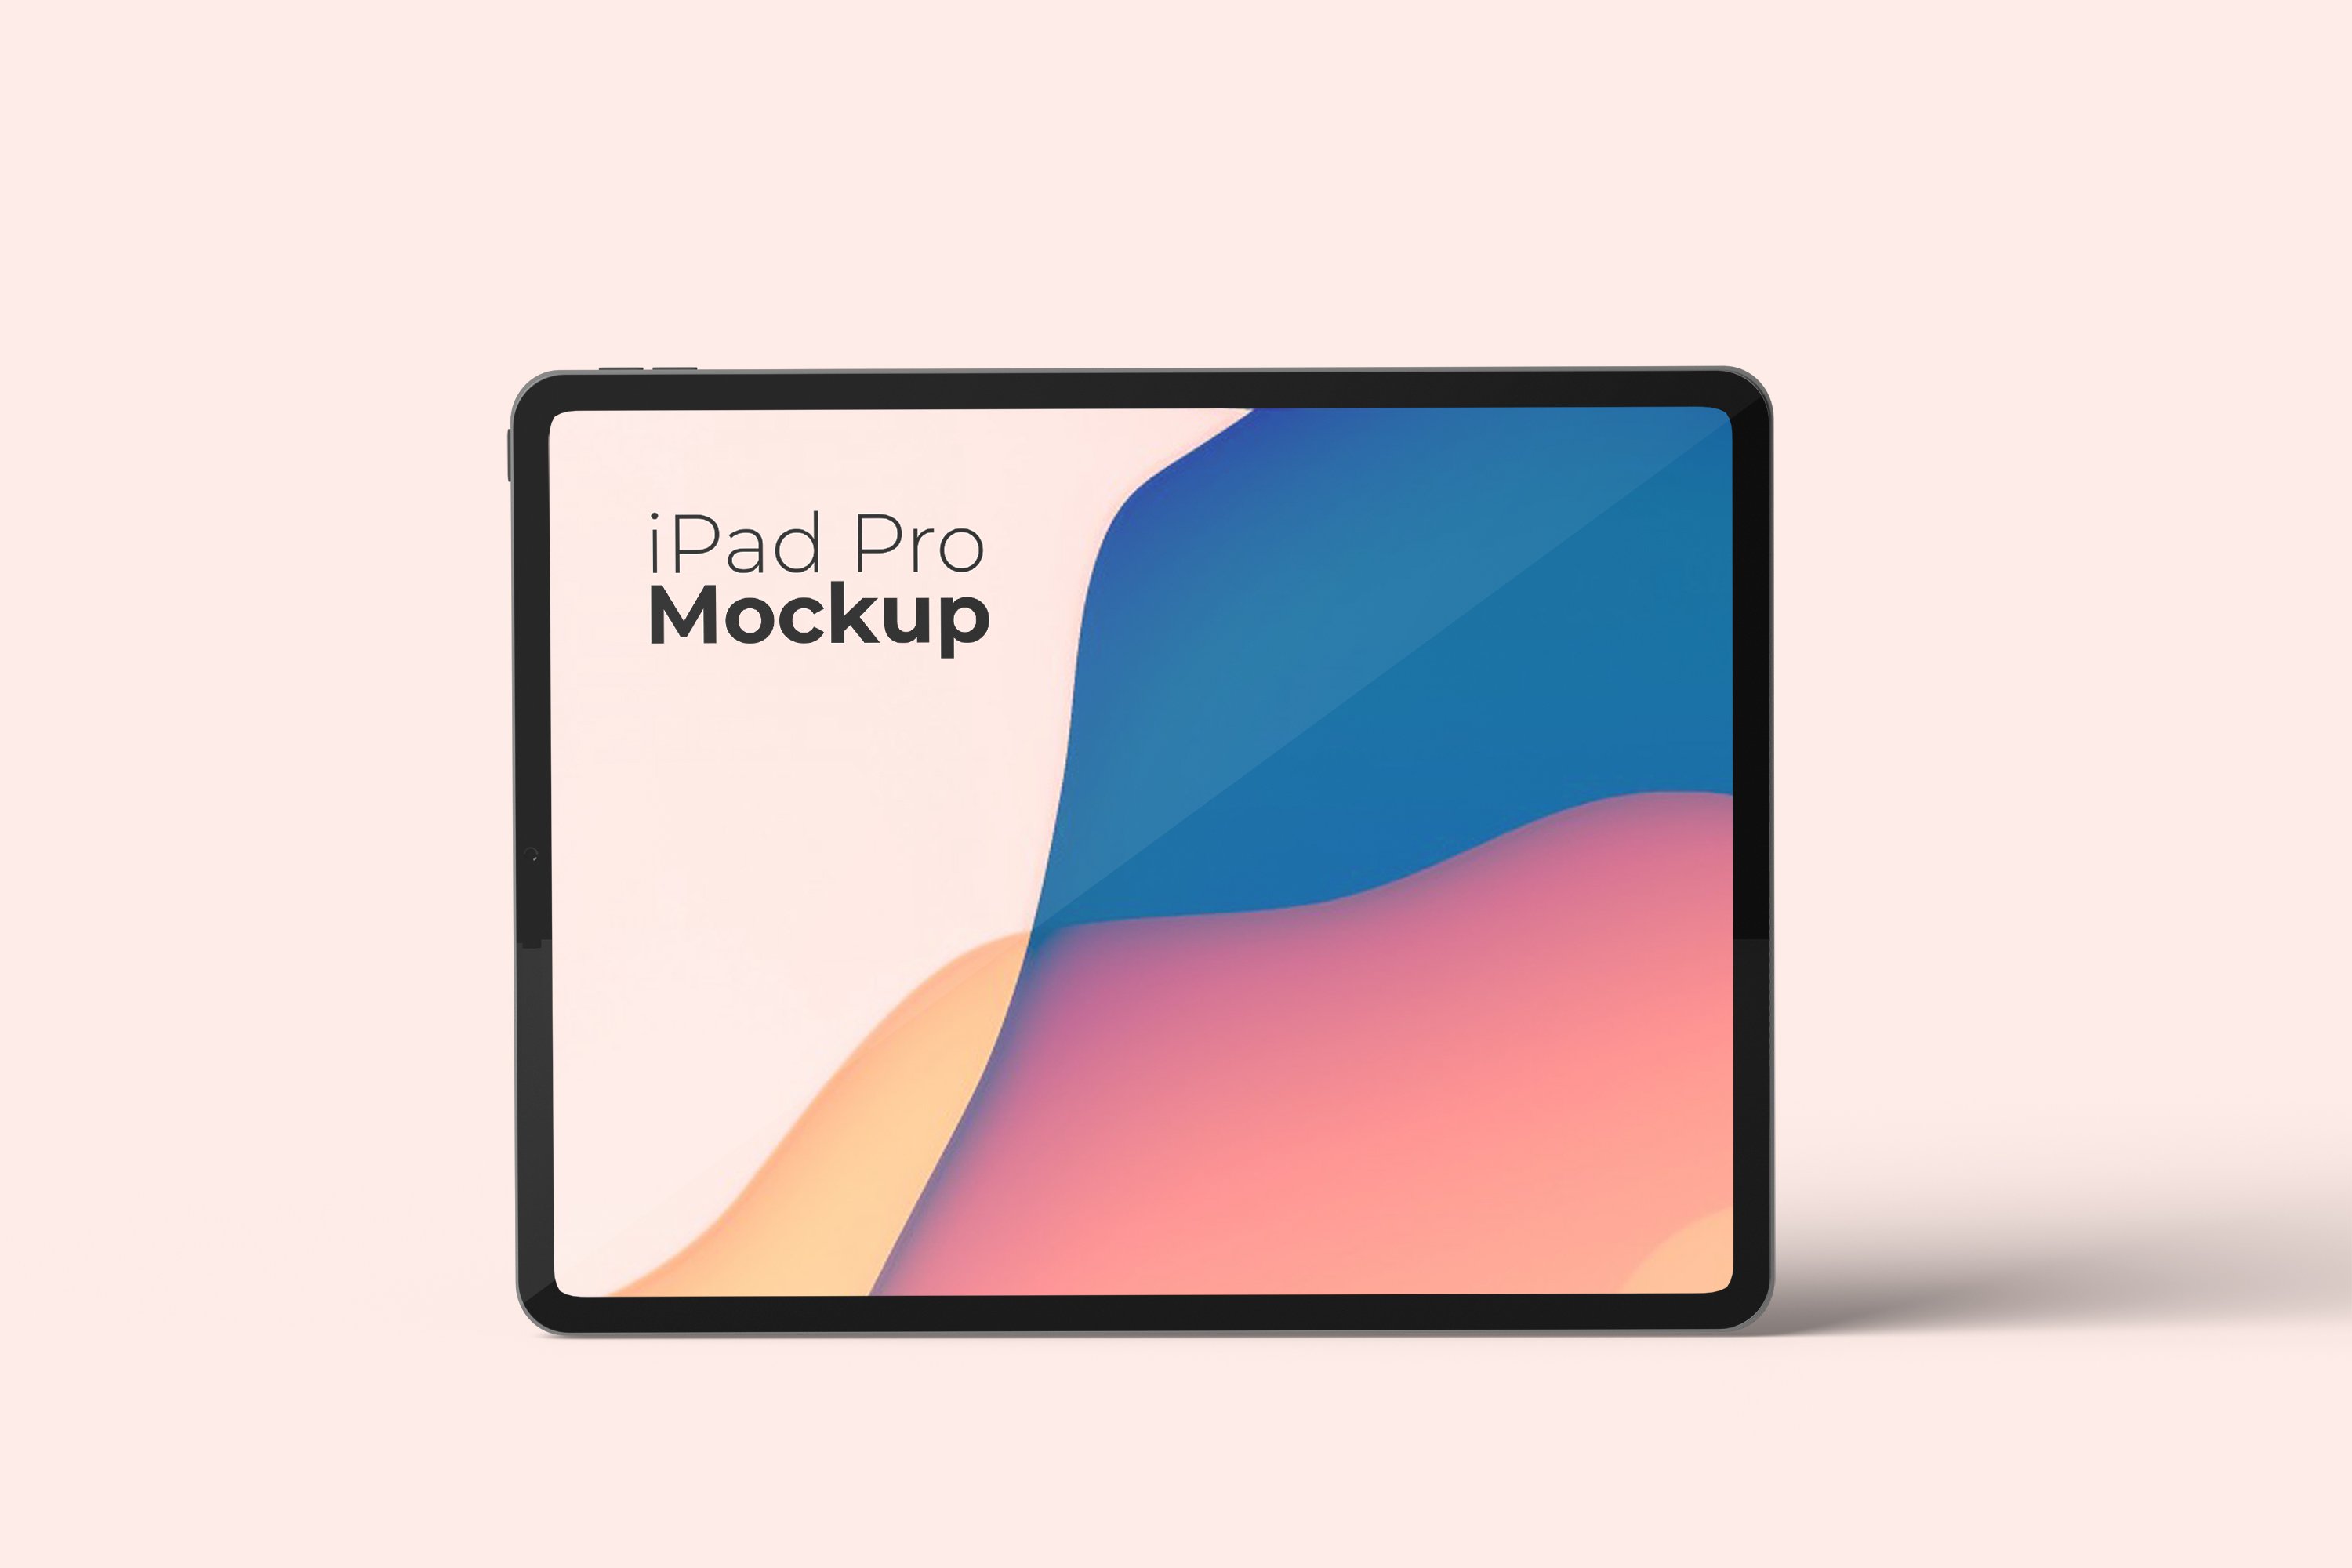 iPad Pro Mockup V3 cover image.